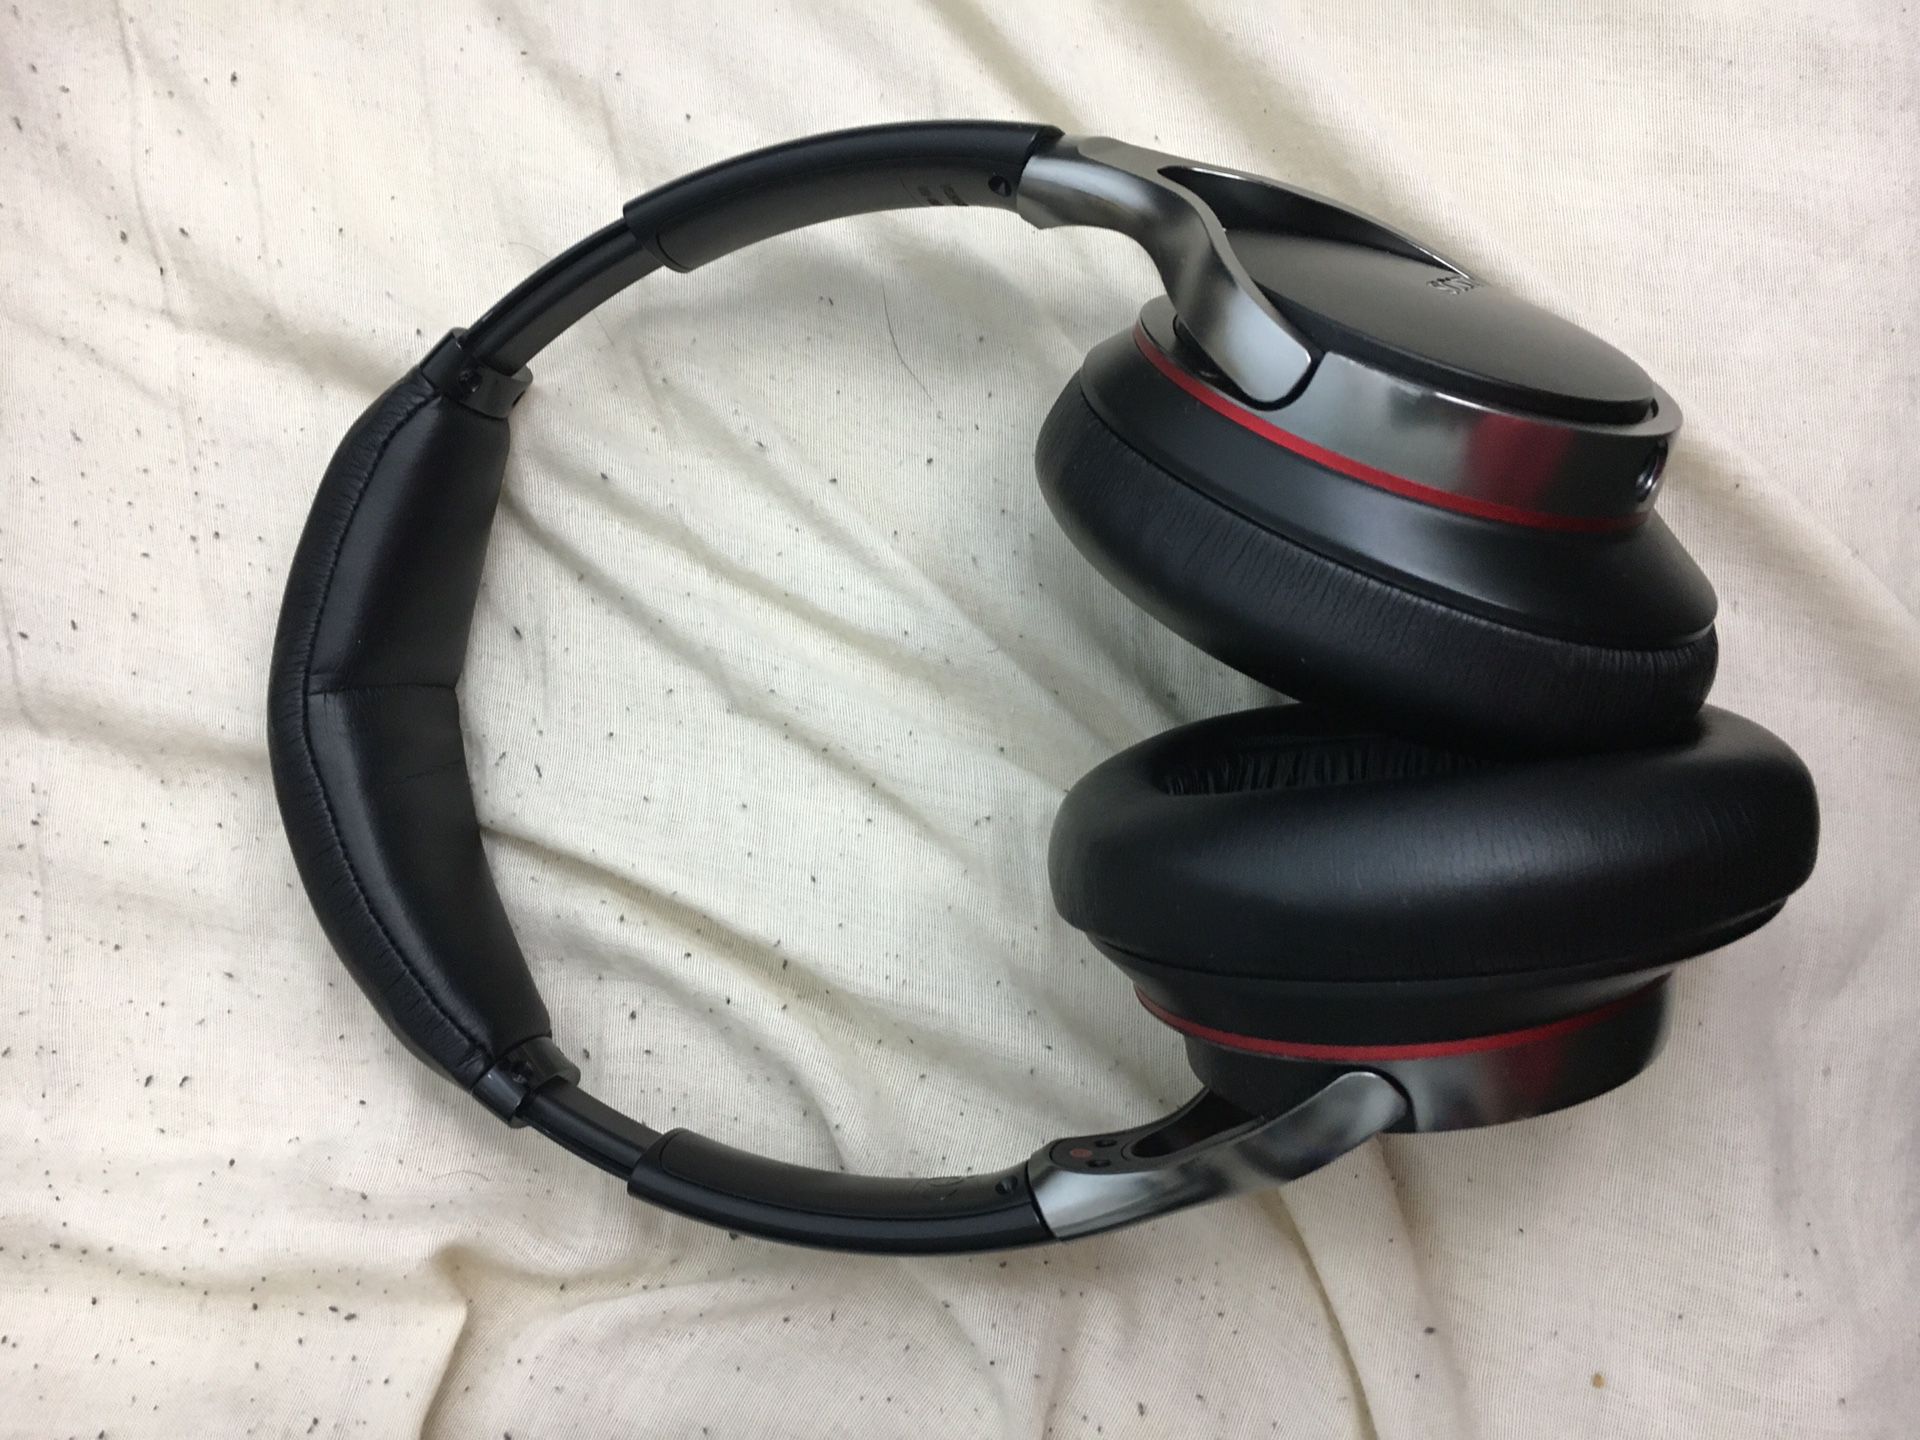 Sony mdr-10r headphones